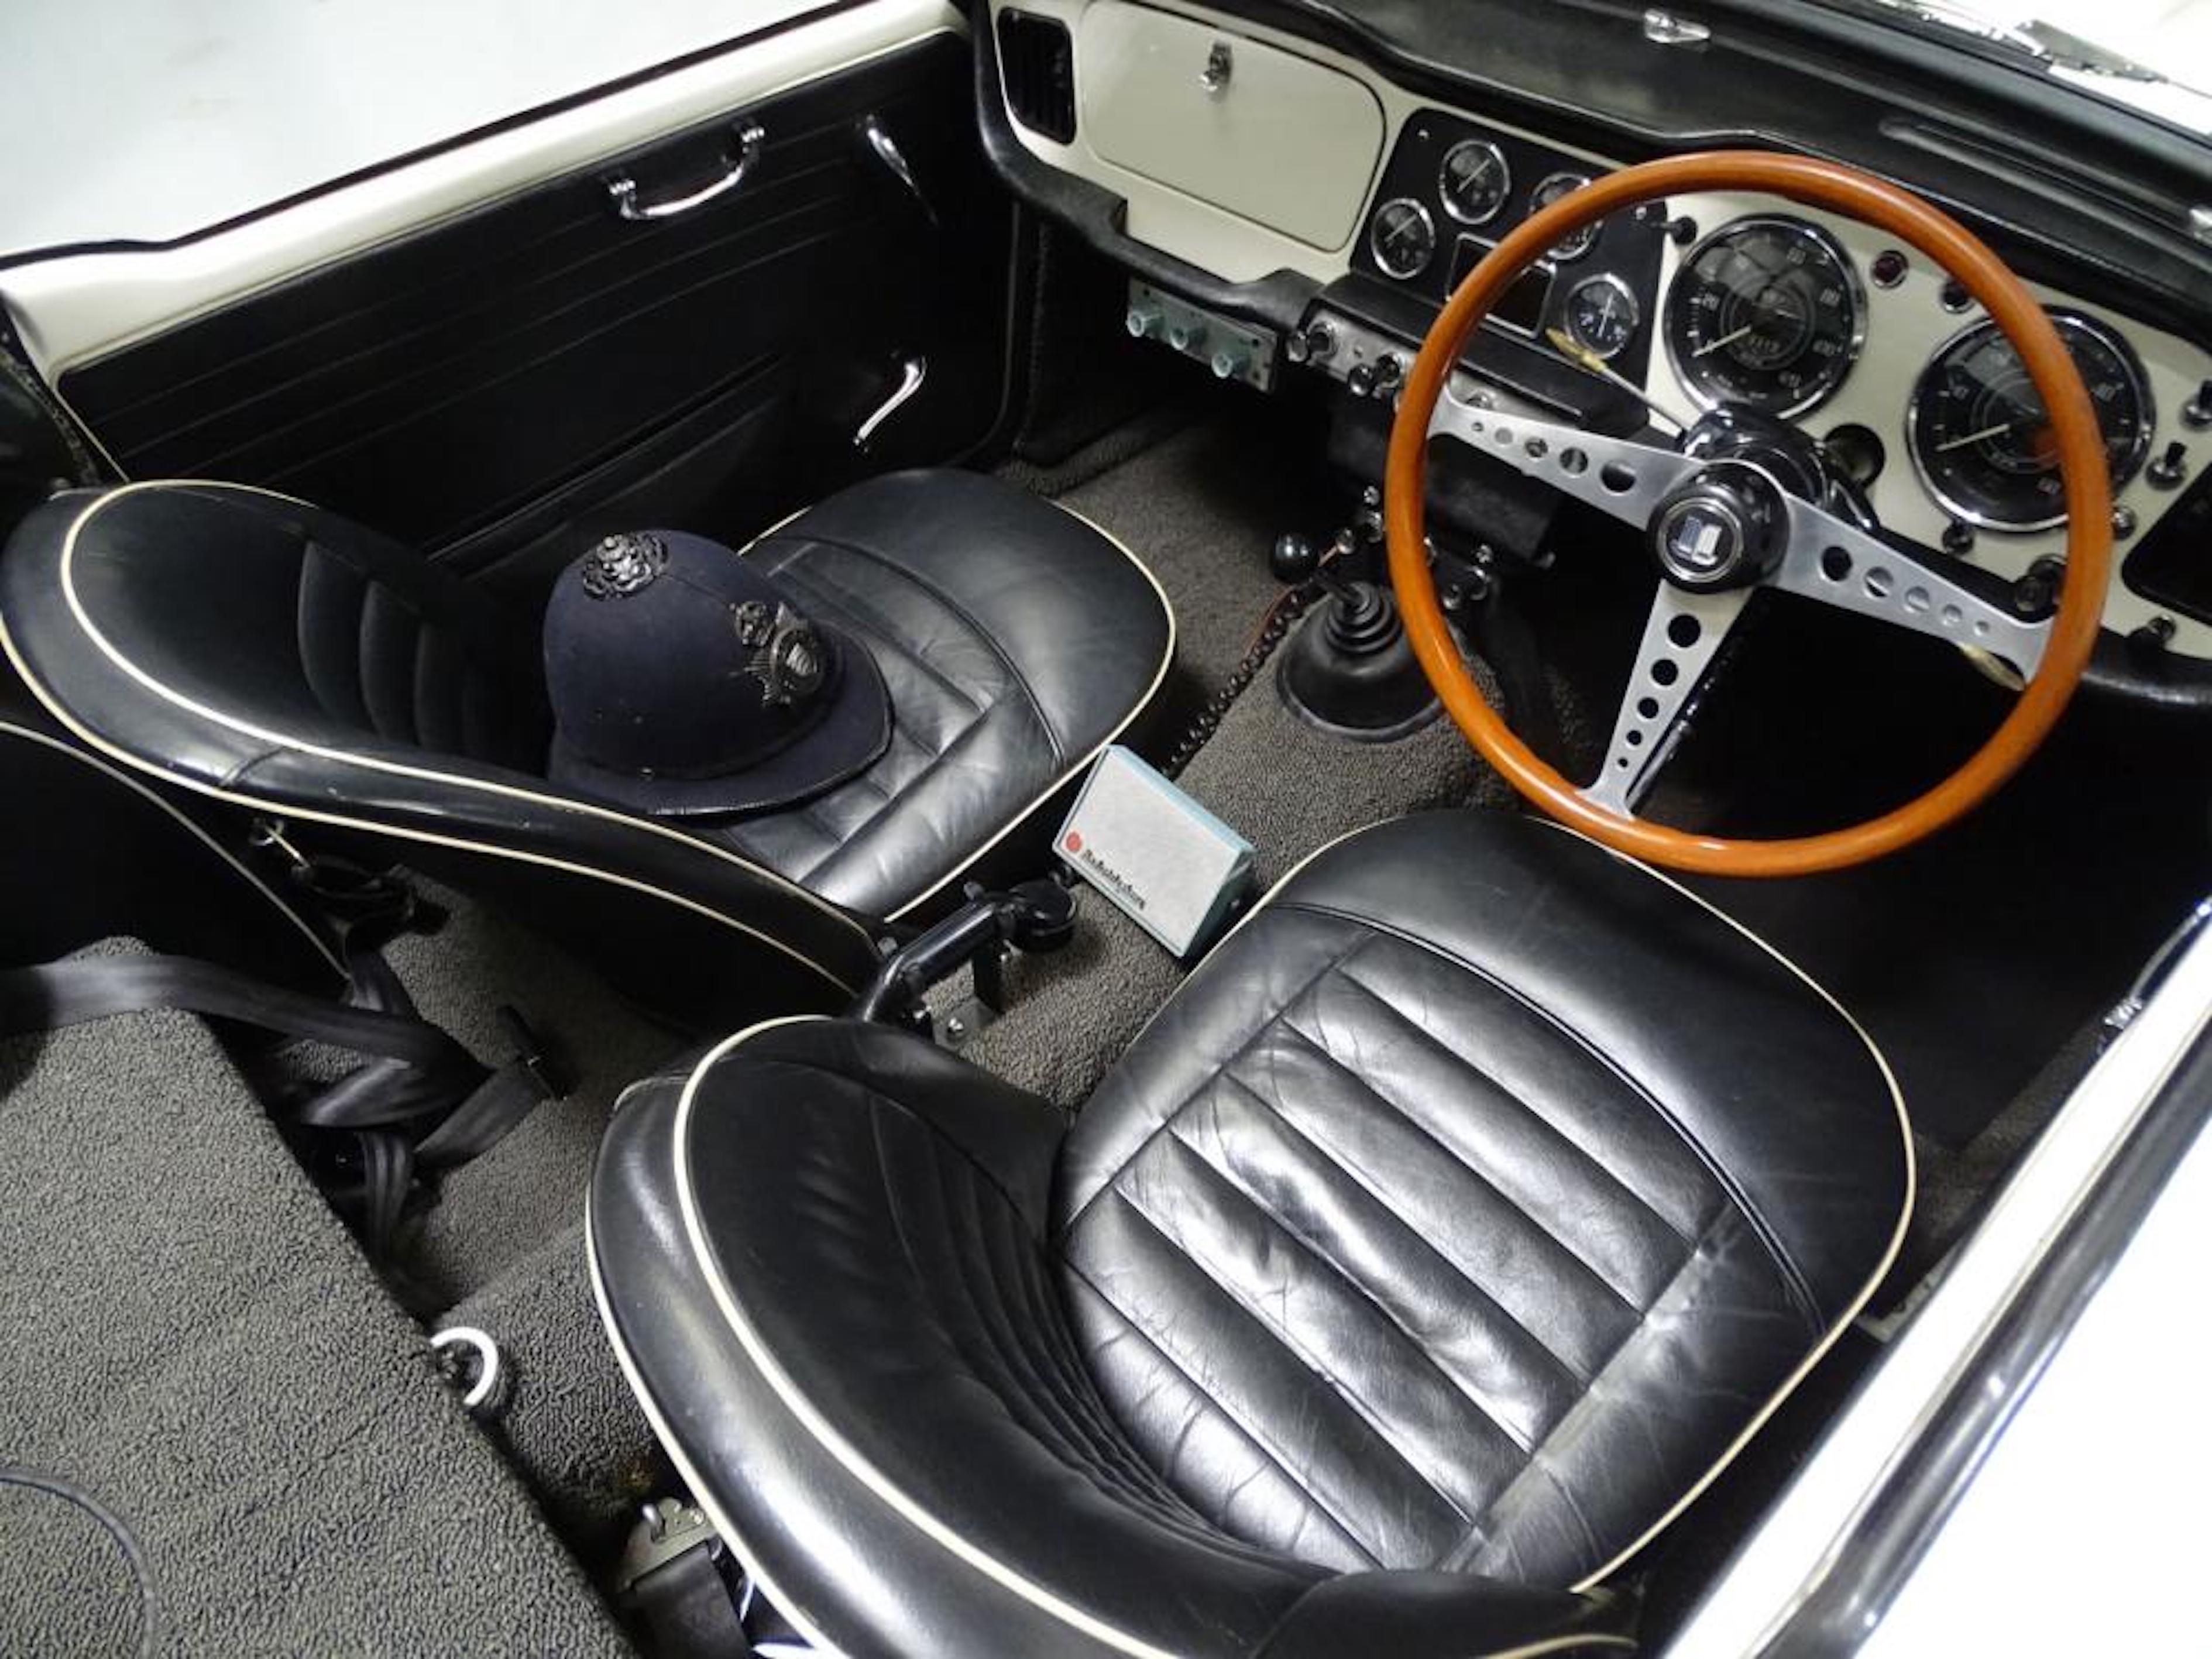 1962 Triumph TR4, British police ‘Triumphed’ over lawbreakers, ClassicCars.com Journal